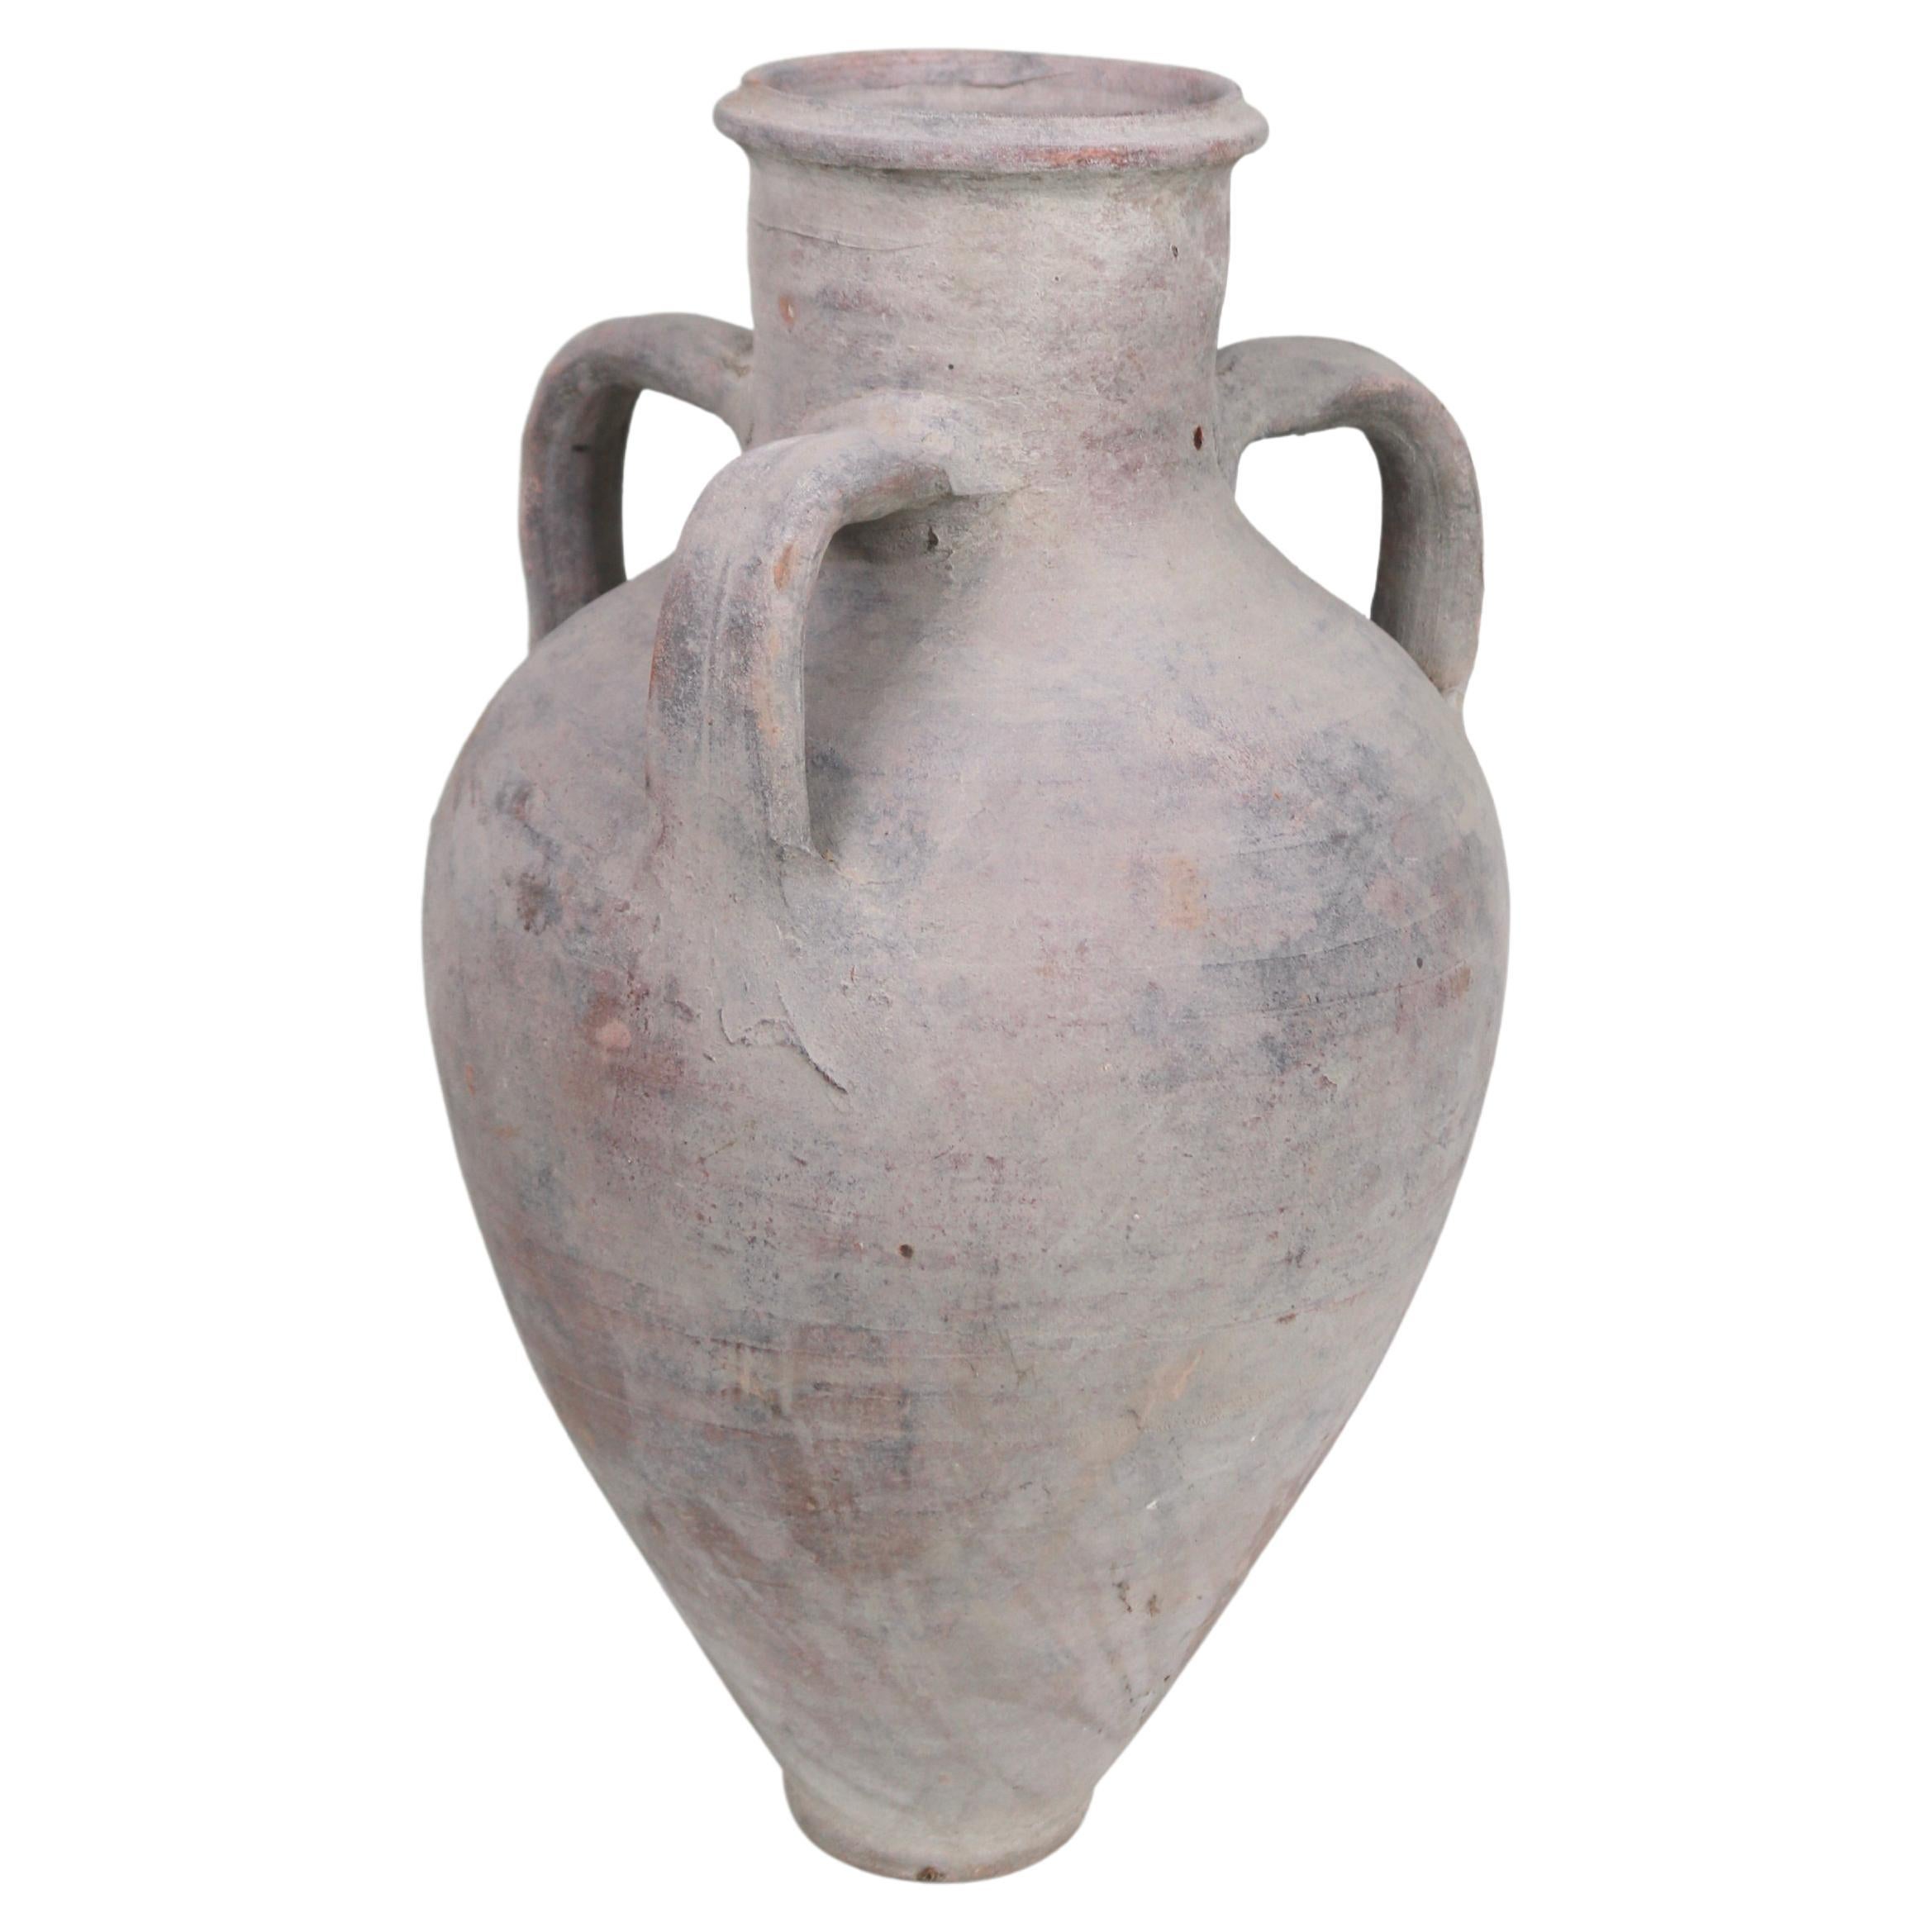 Is amphora Greek or Latin?